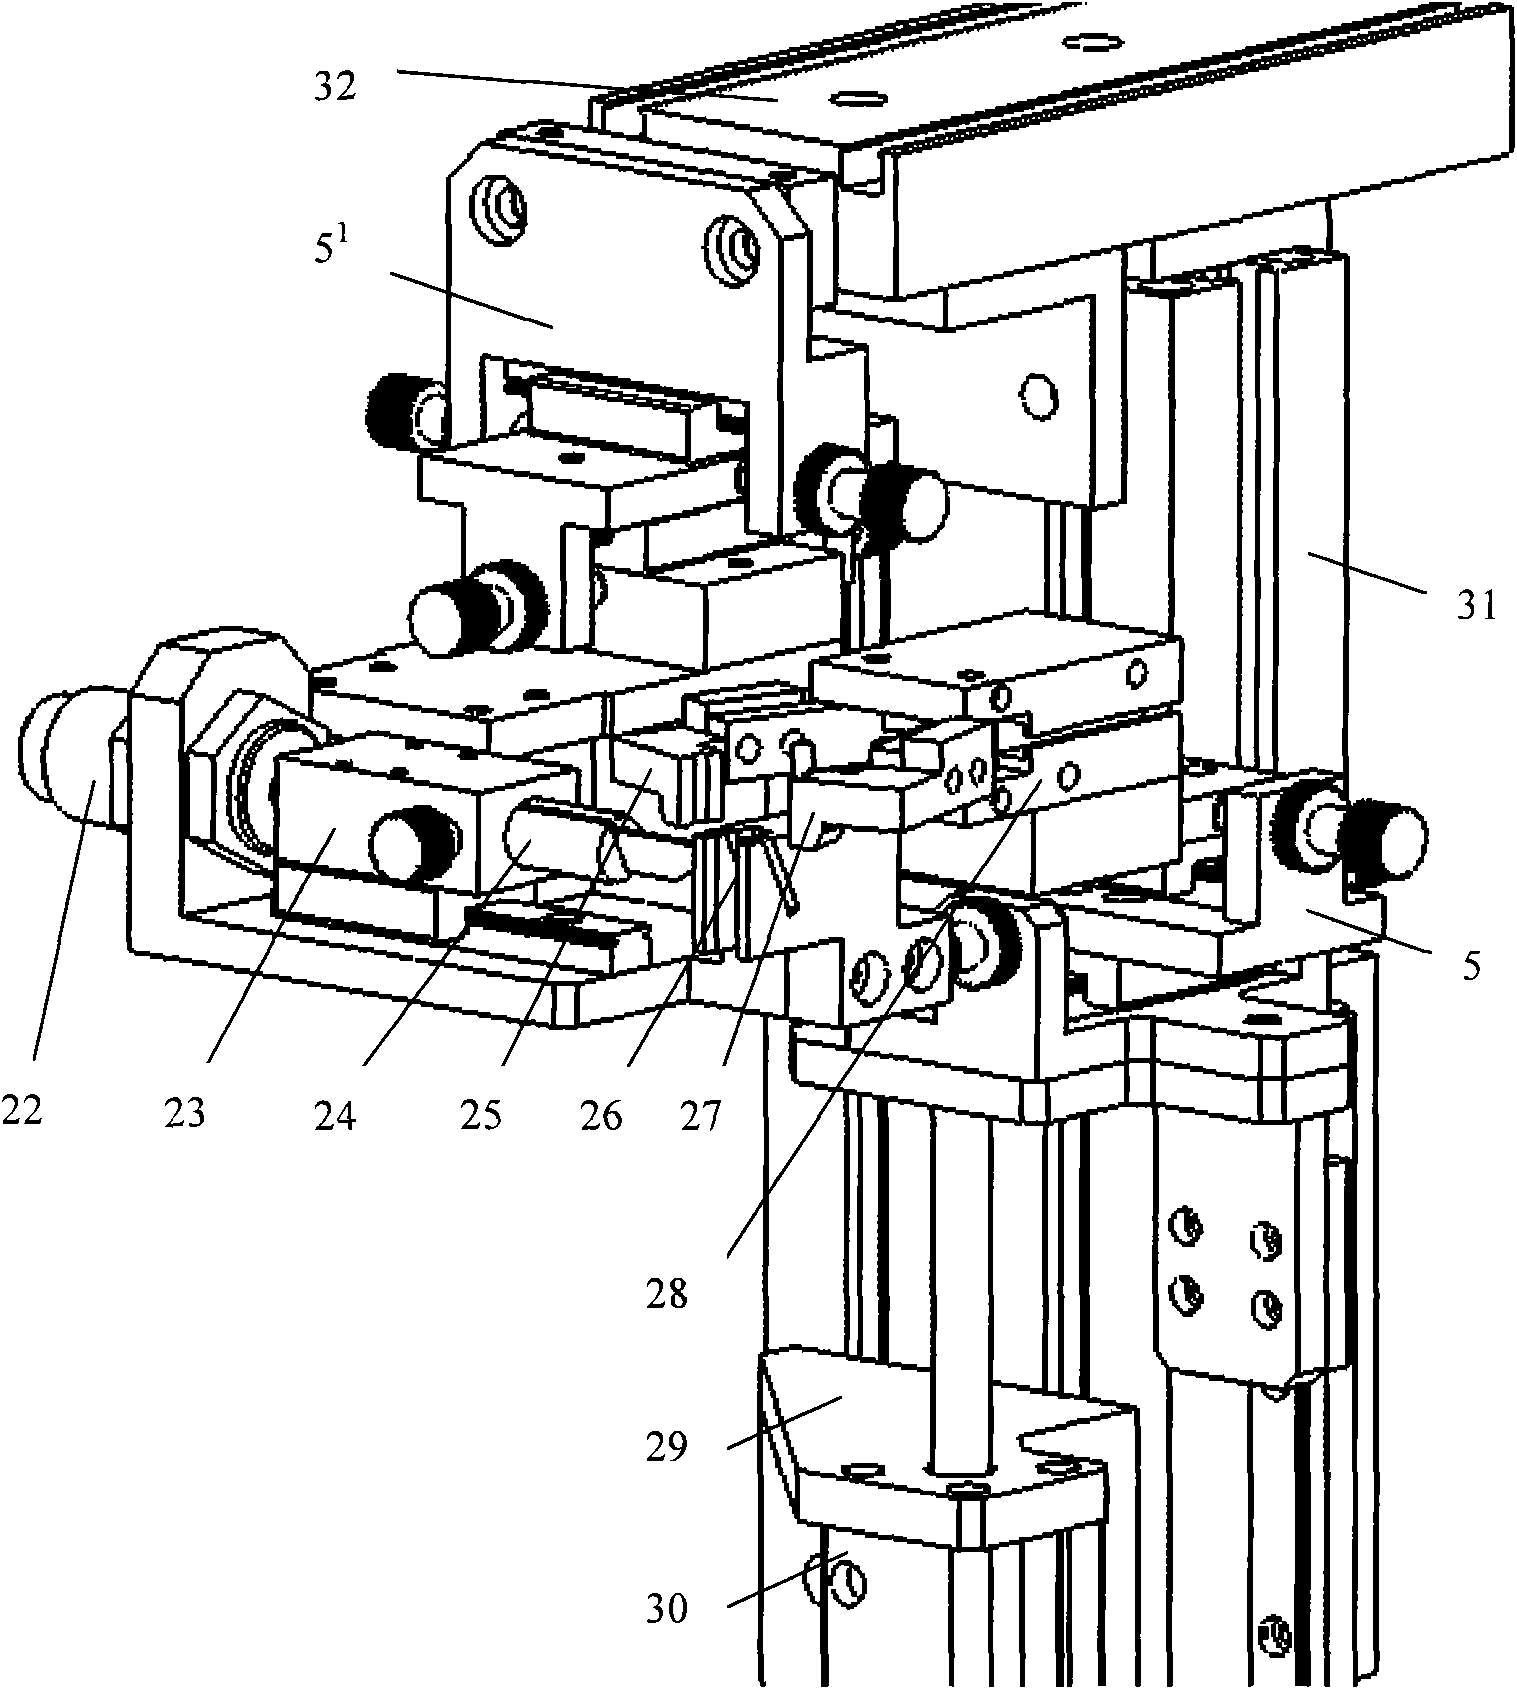 Automatic grafting machine